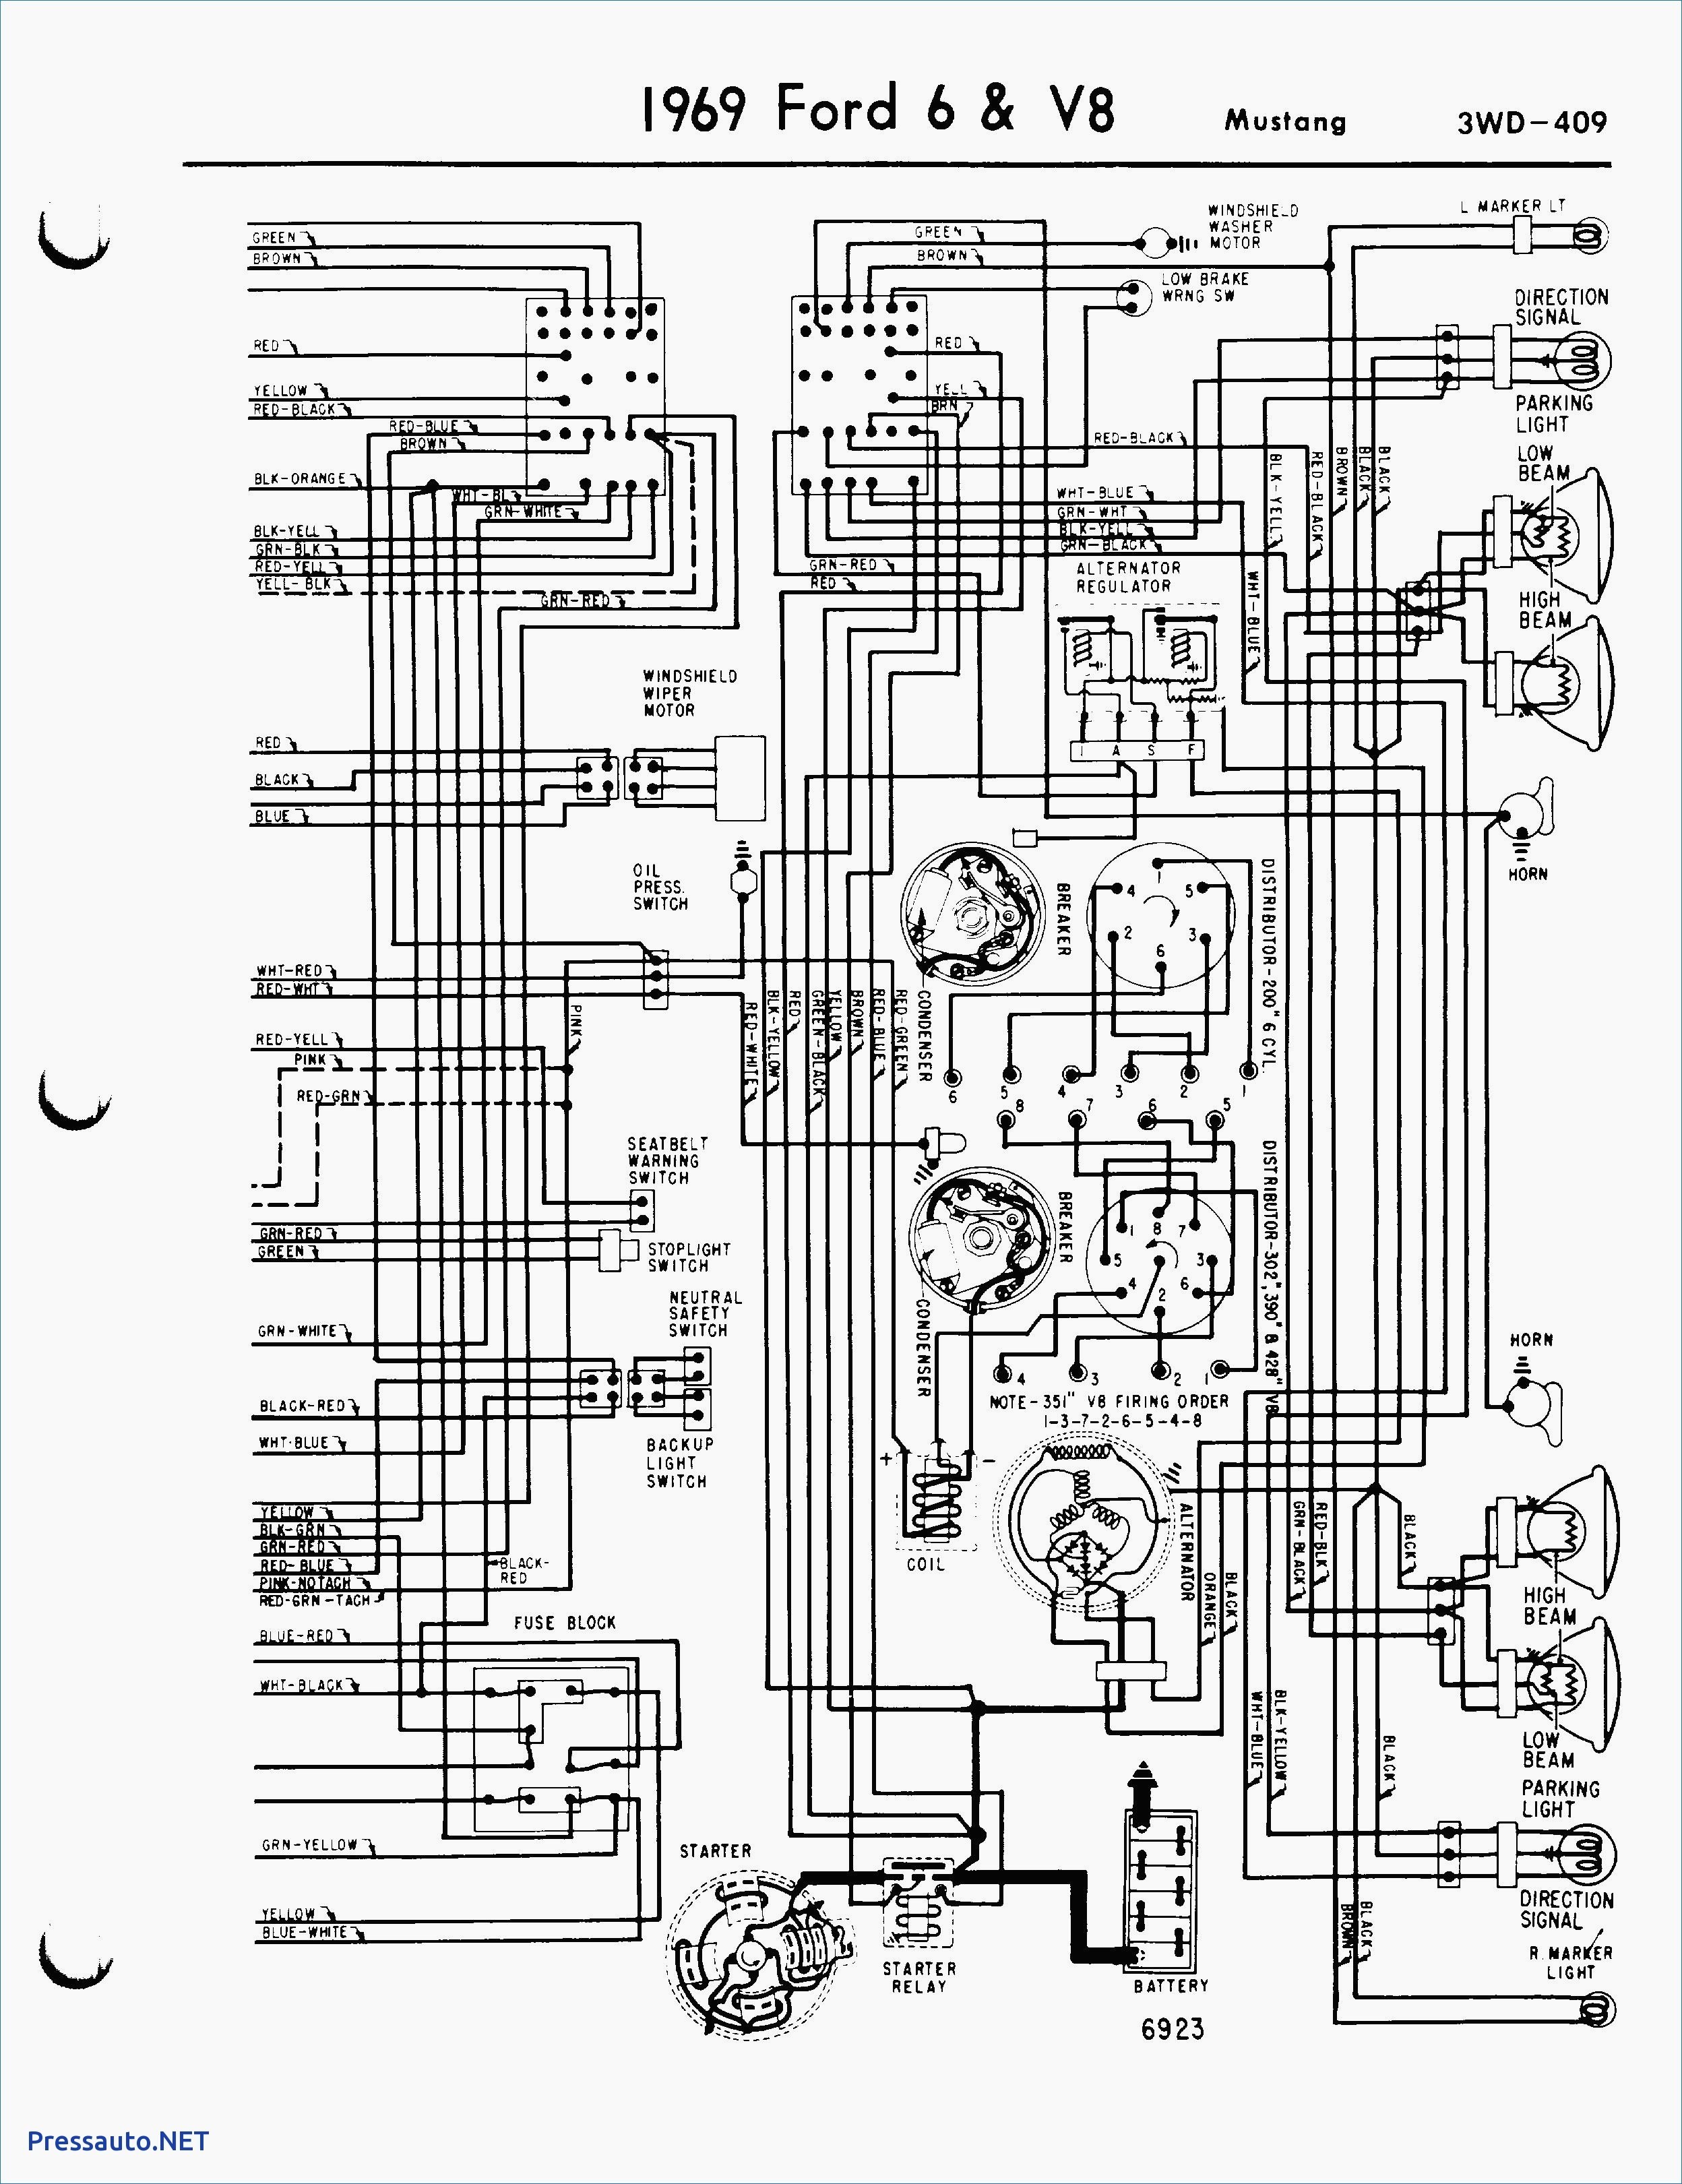 Wiring Diagram Alternator Voltage Regulator Best Lucas Voltage Regulator Wiring Diagram Dolgular Fresh Kubota Tractor Alternator Wiring Diagrams Dolgular